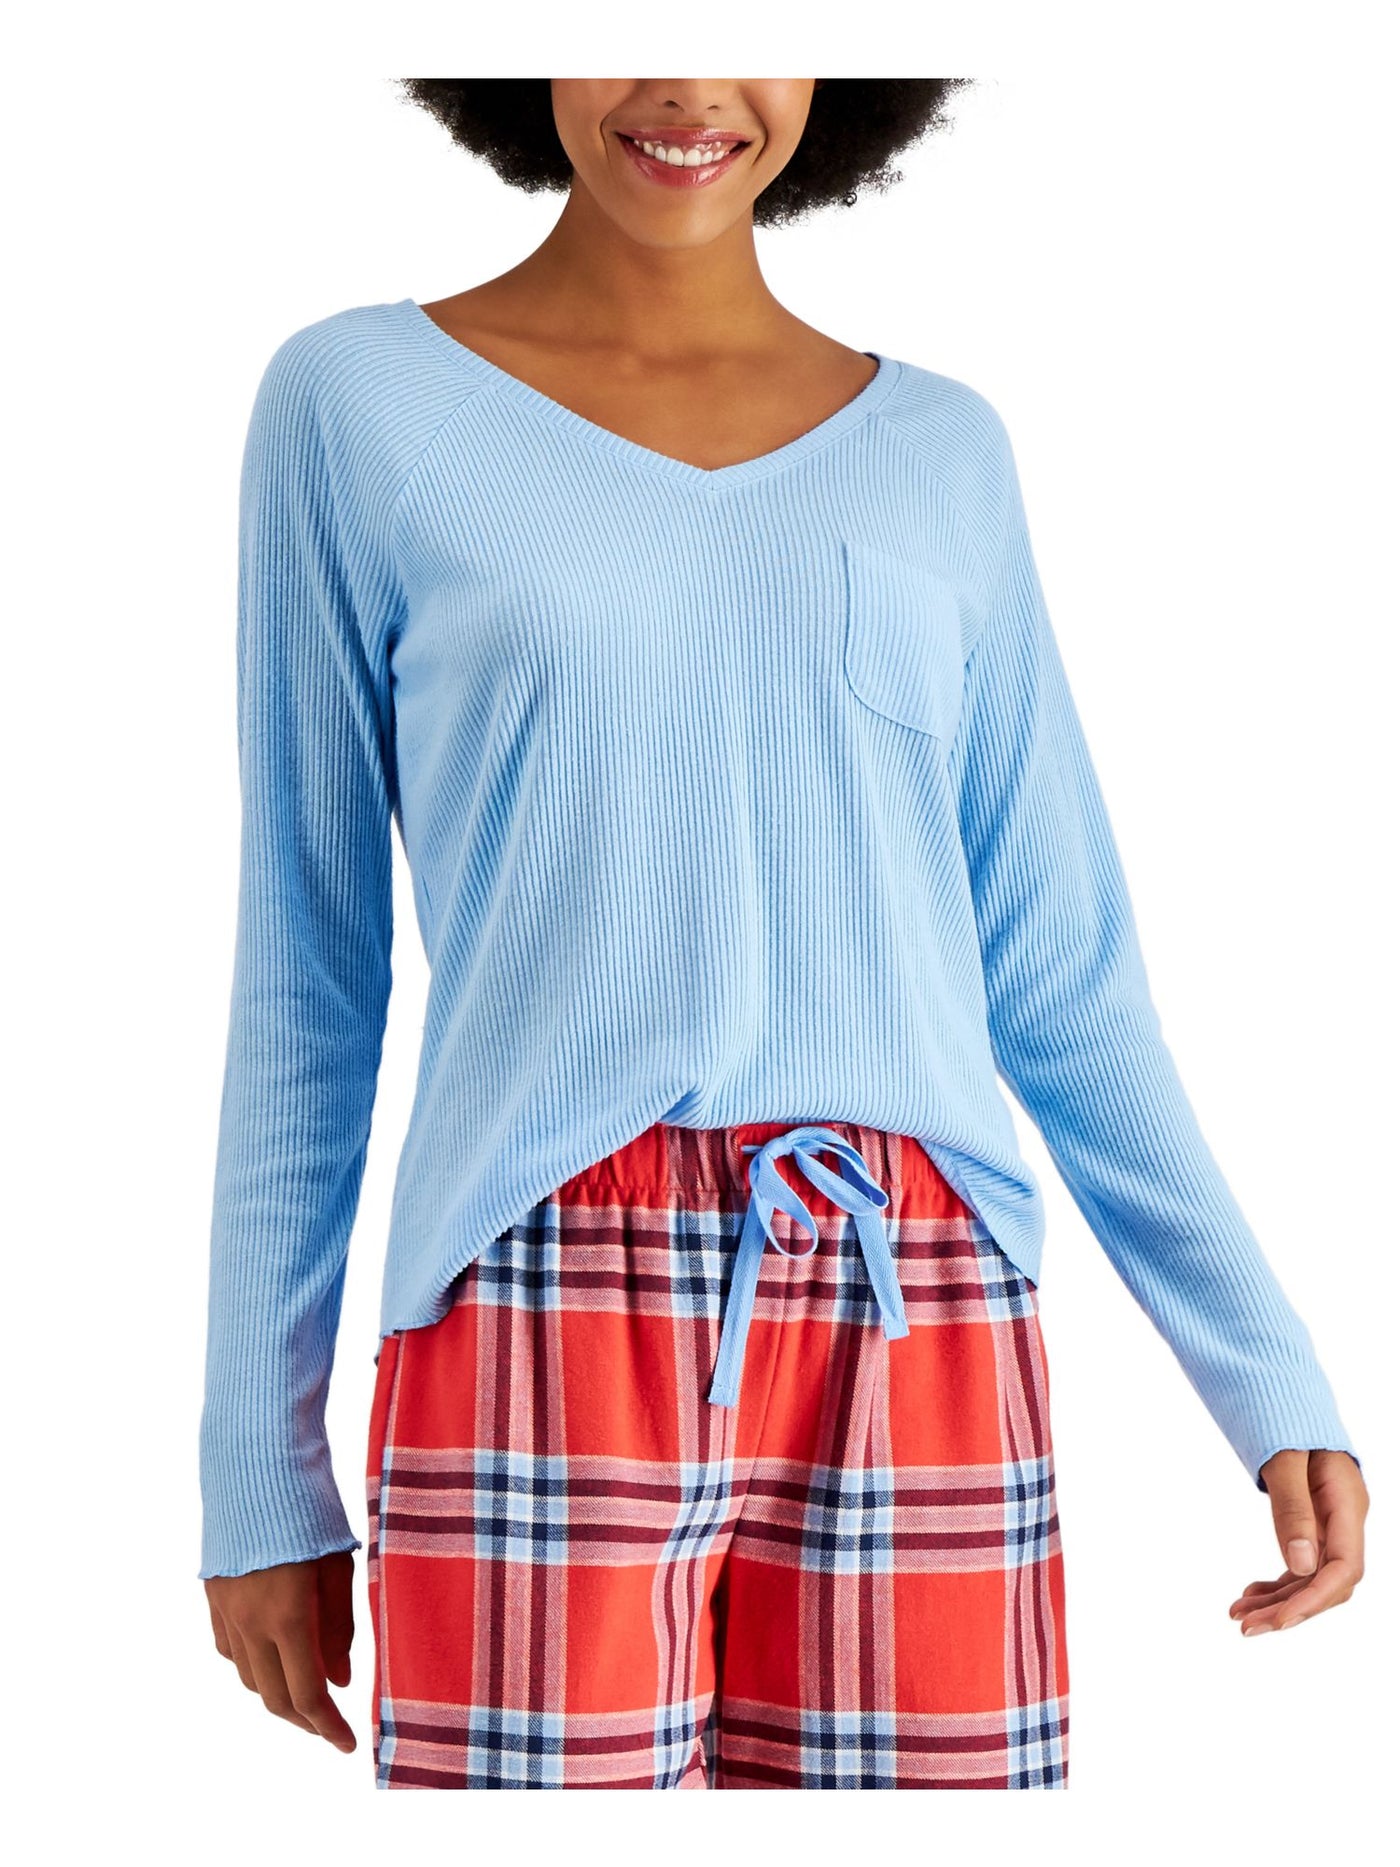 JENNI INTIMATES Intimates Light Blue Chest Pocket Long Raglan Sleeves Sleep Shirt Pajama Top XL